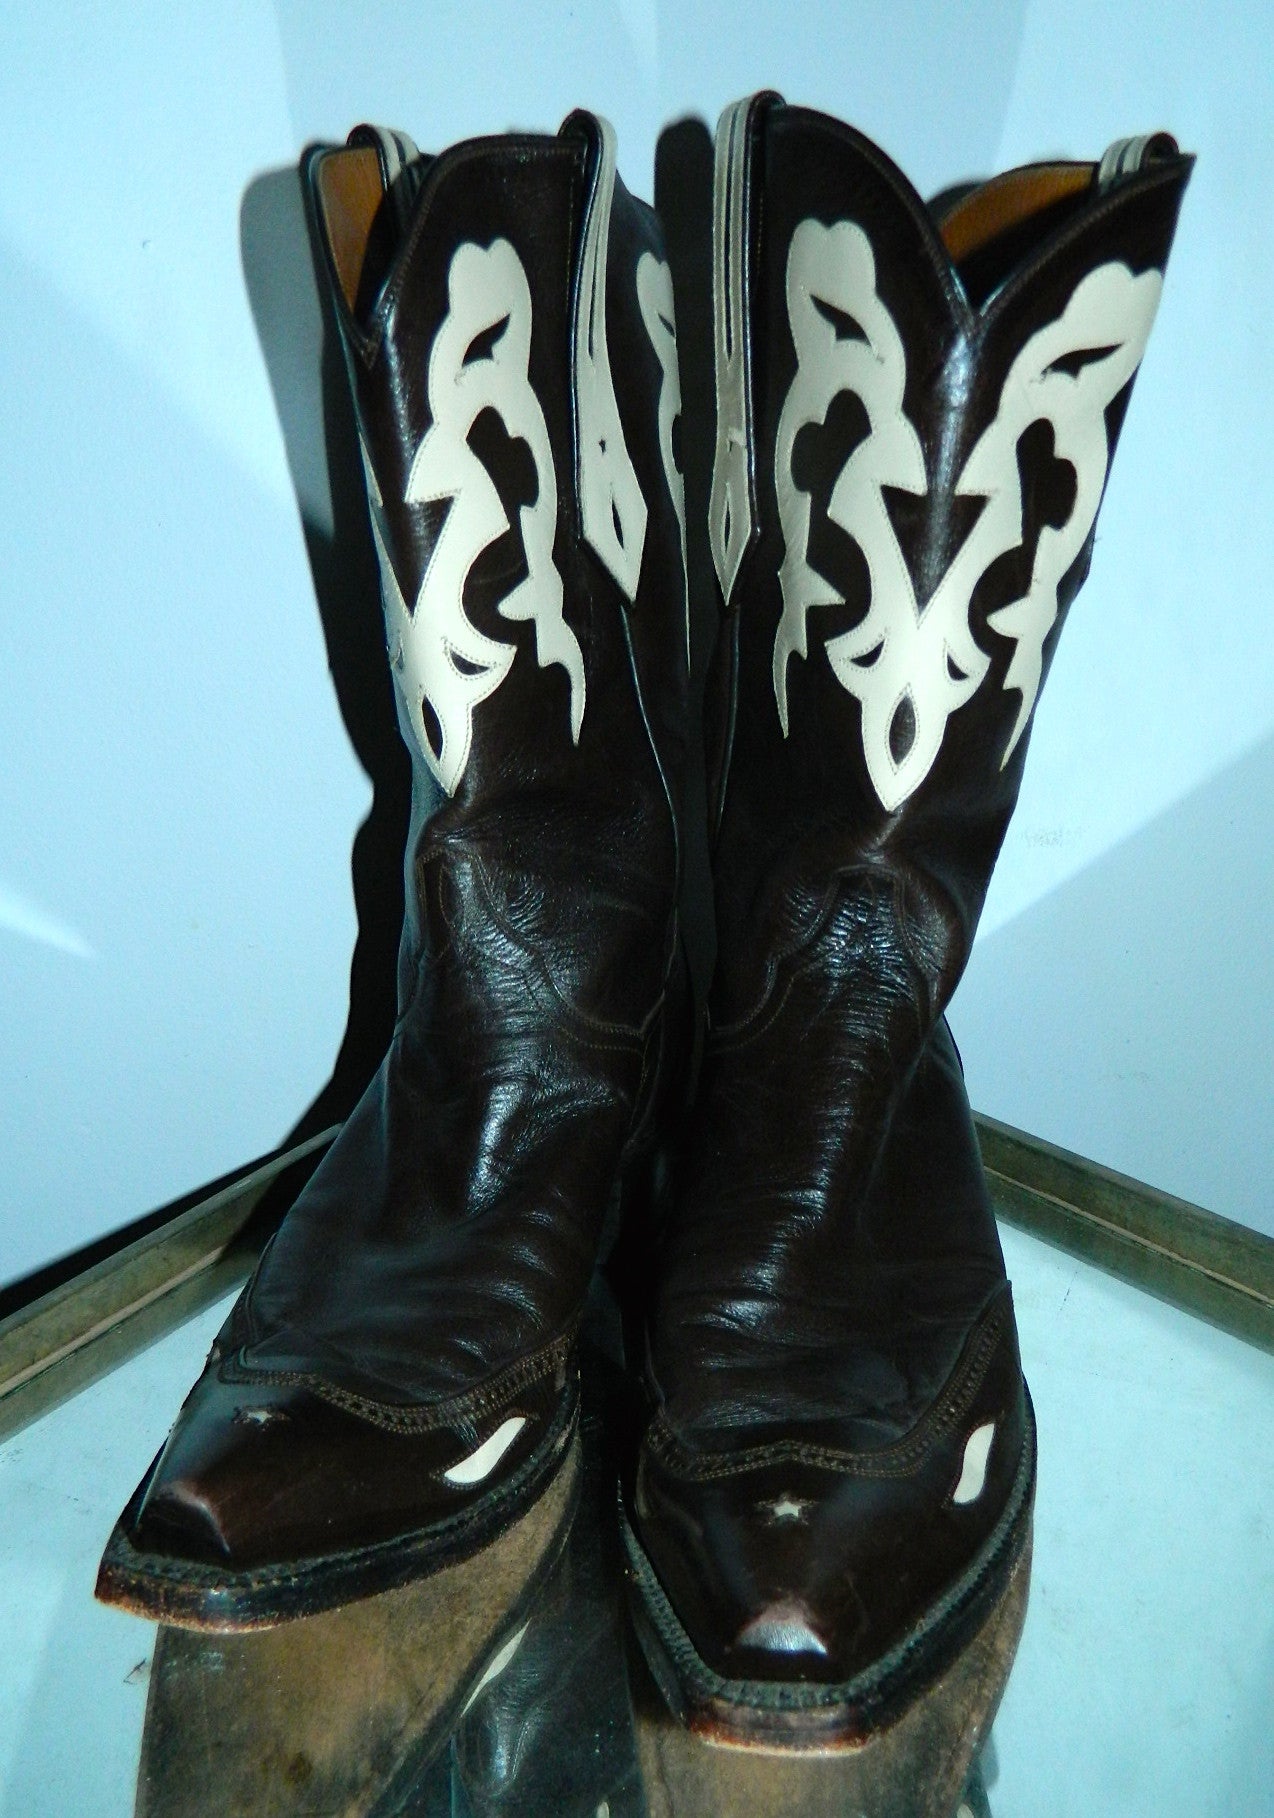 J.B. Hill cowboy boots #29 Kangaroo leather chocolate brown ivory US womens 8 1/2 B